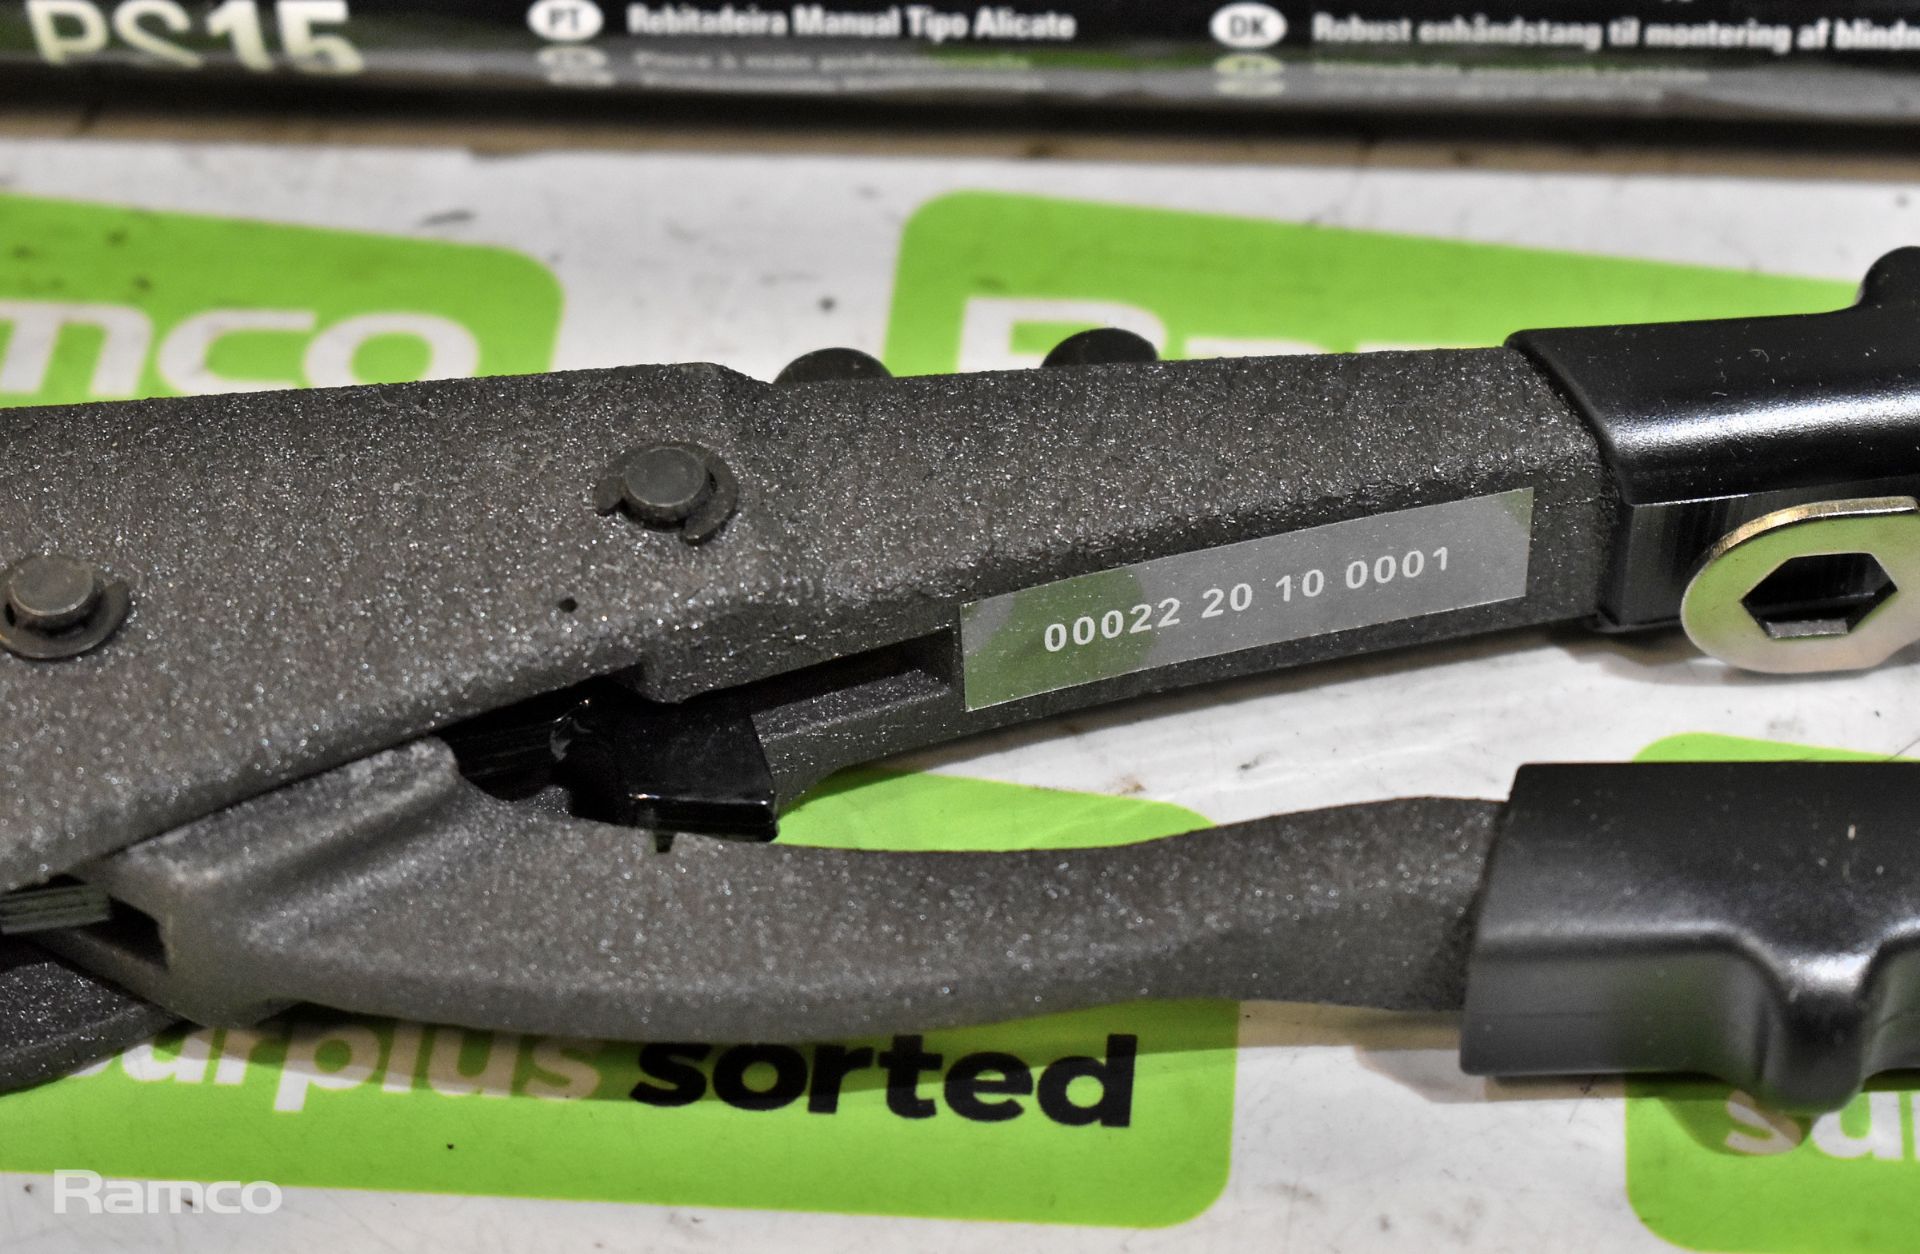 POP set PS15 professional hand rivet tool - Image 3 of 3